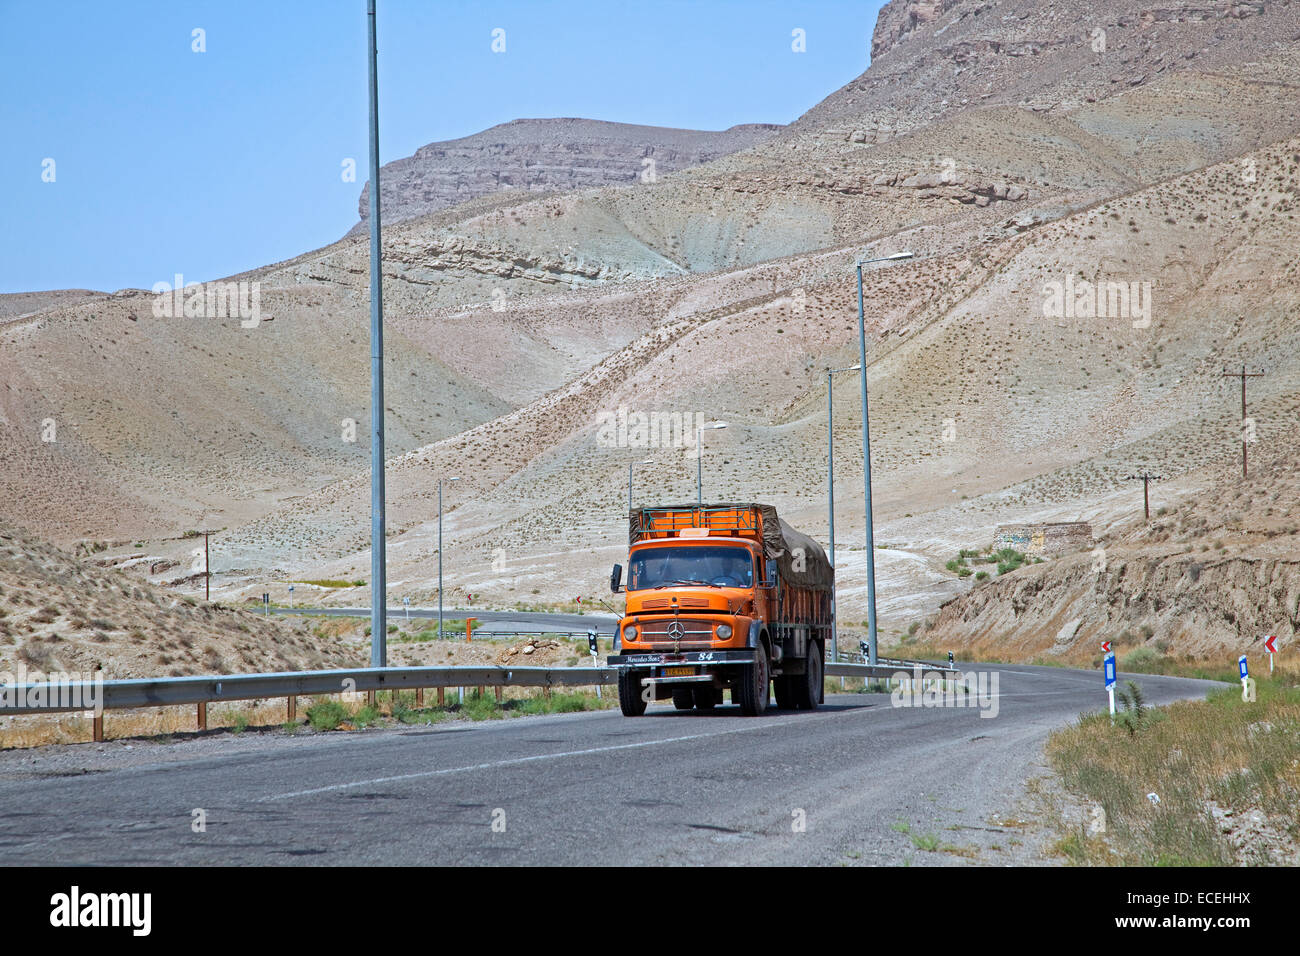 Carretilla en autopista desde Mashhad a Turkmenistán a través del desierto de Karakum en Irán Foto de stock